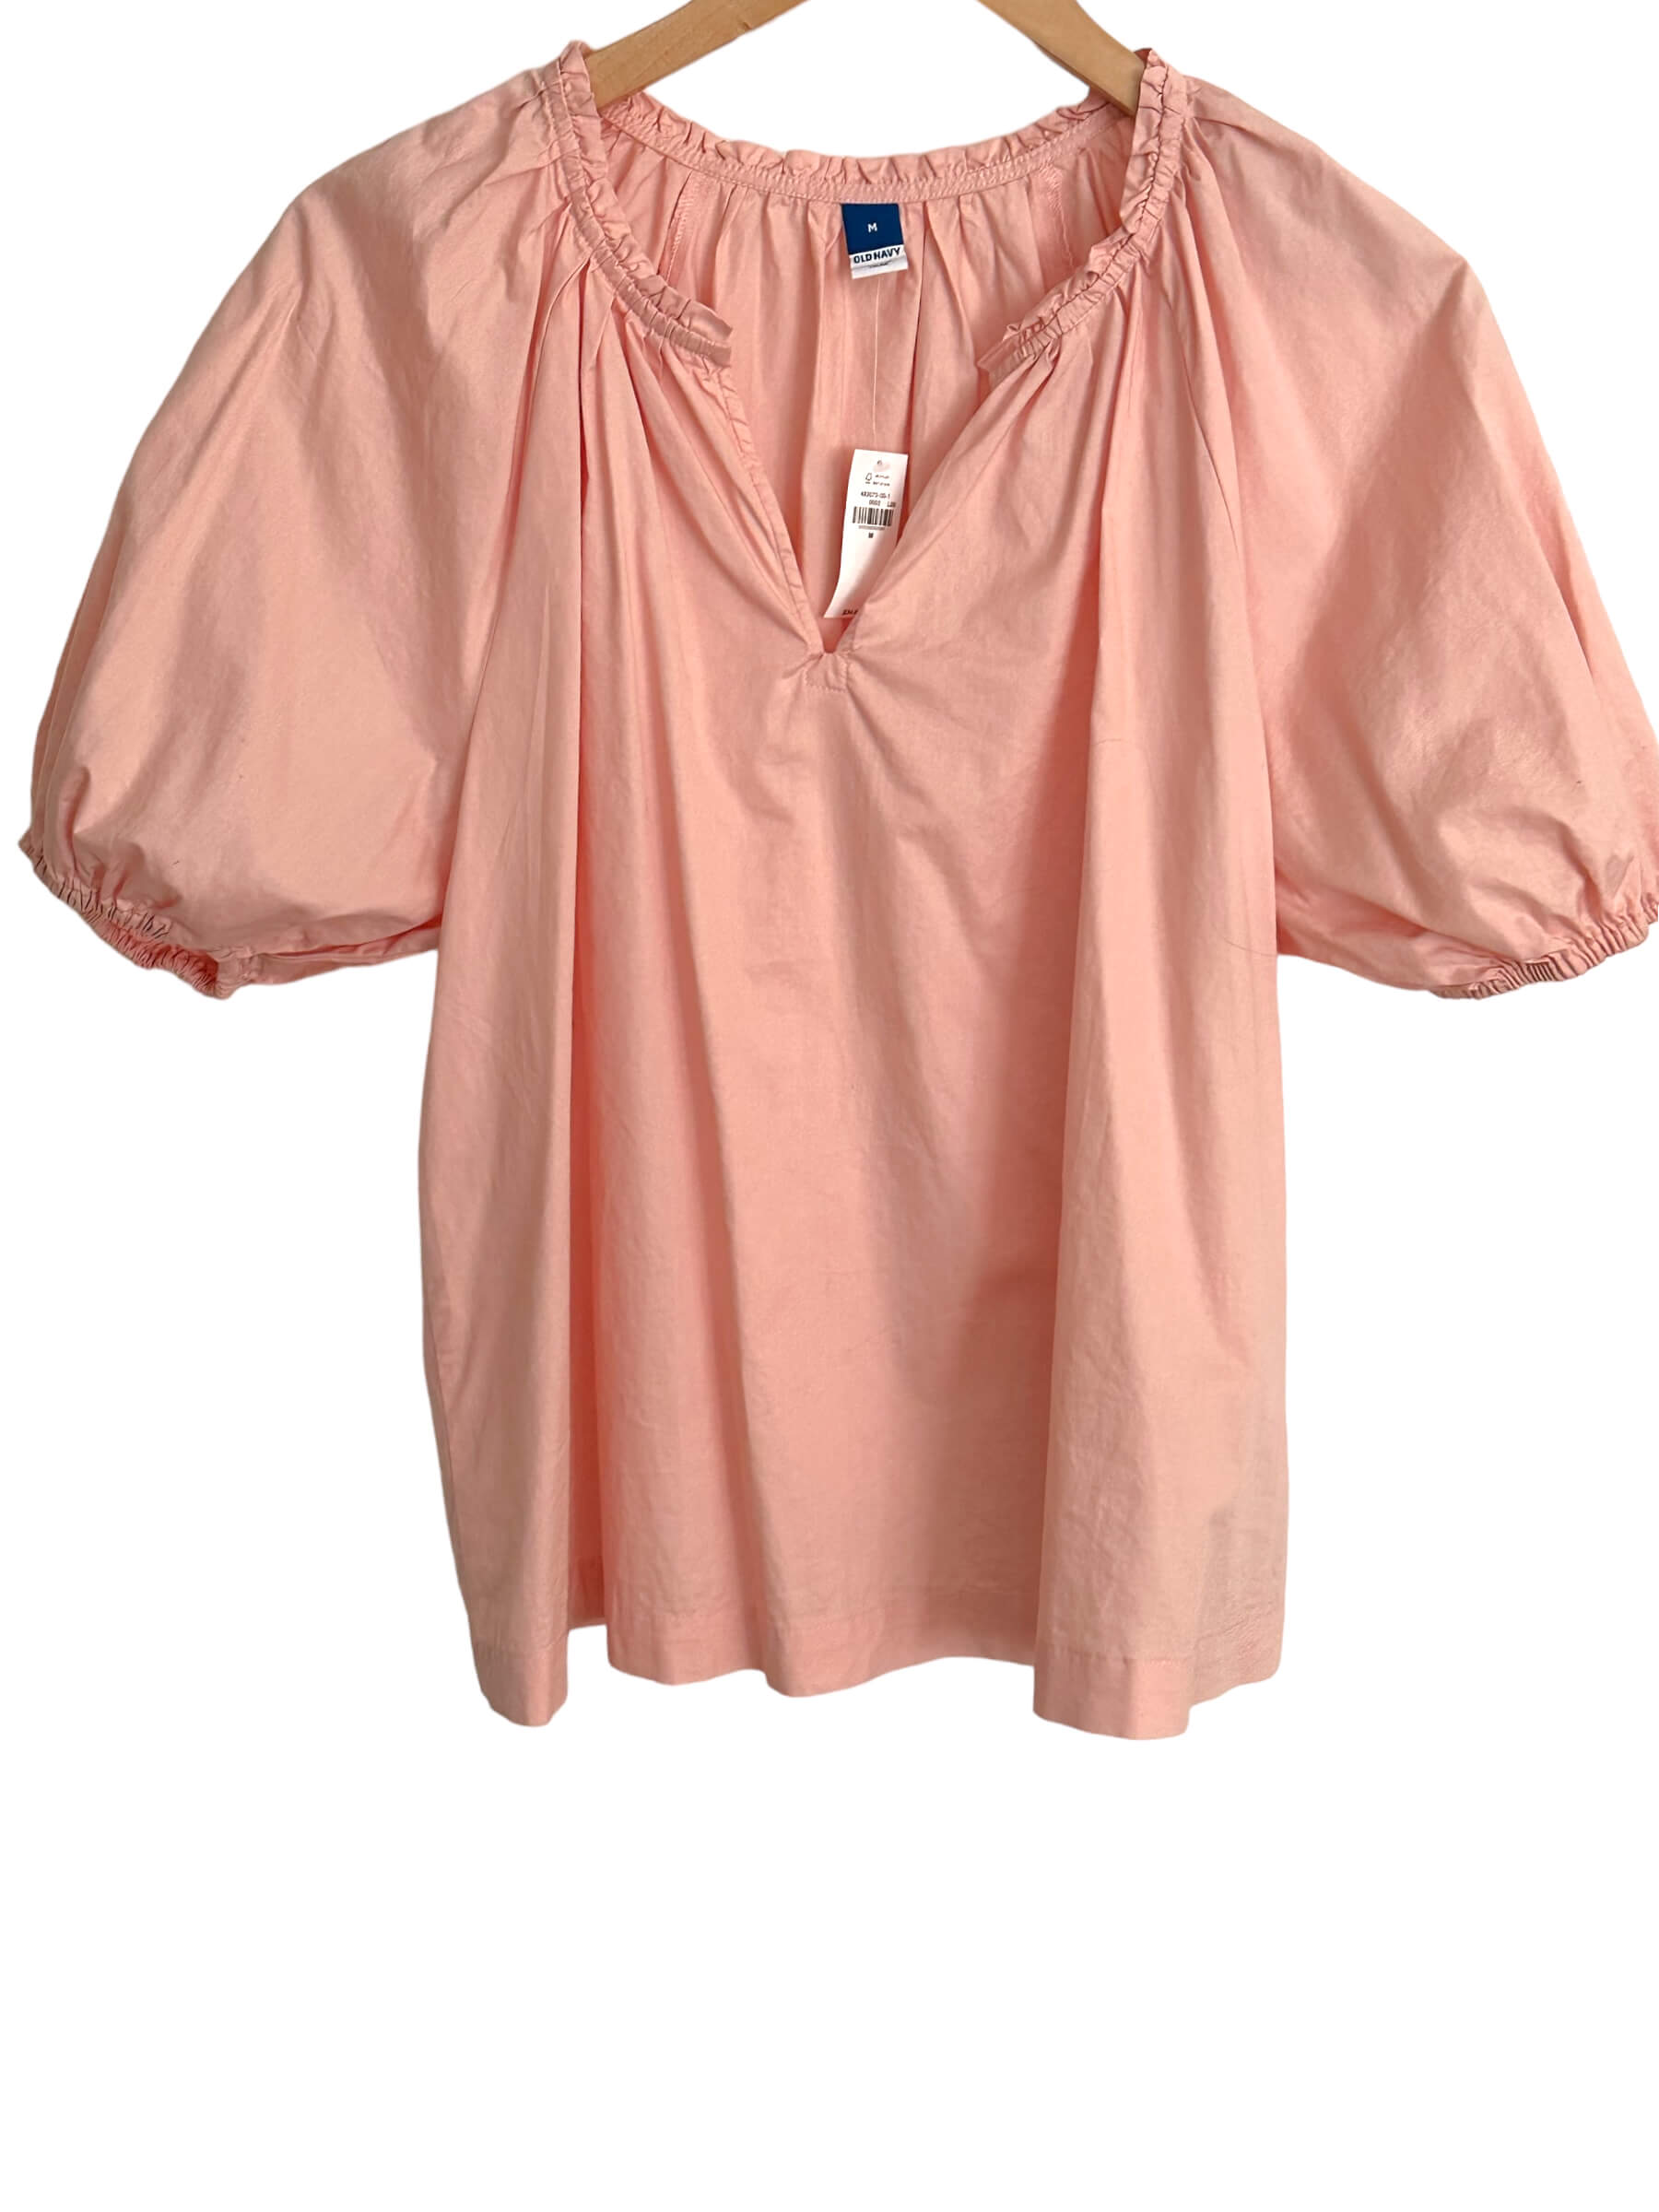 Soft Autumn OLD NAVY pink bamboo puff sleeve split-neck blouse